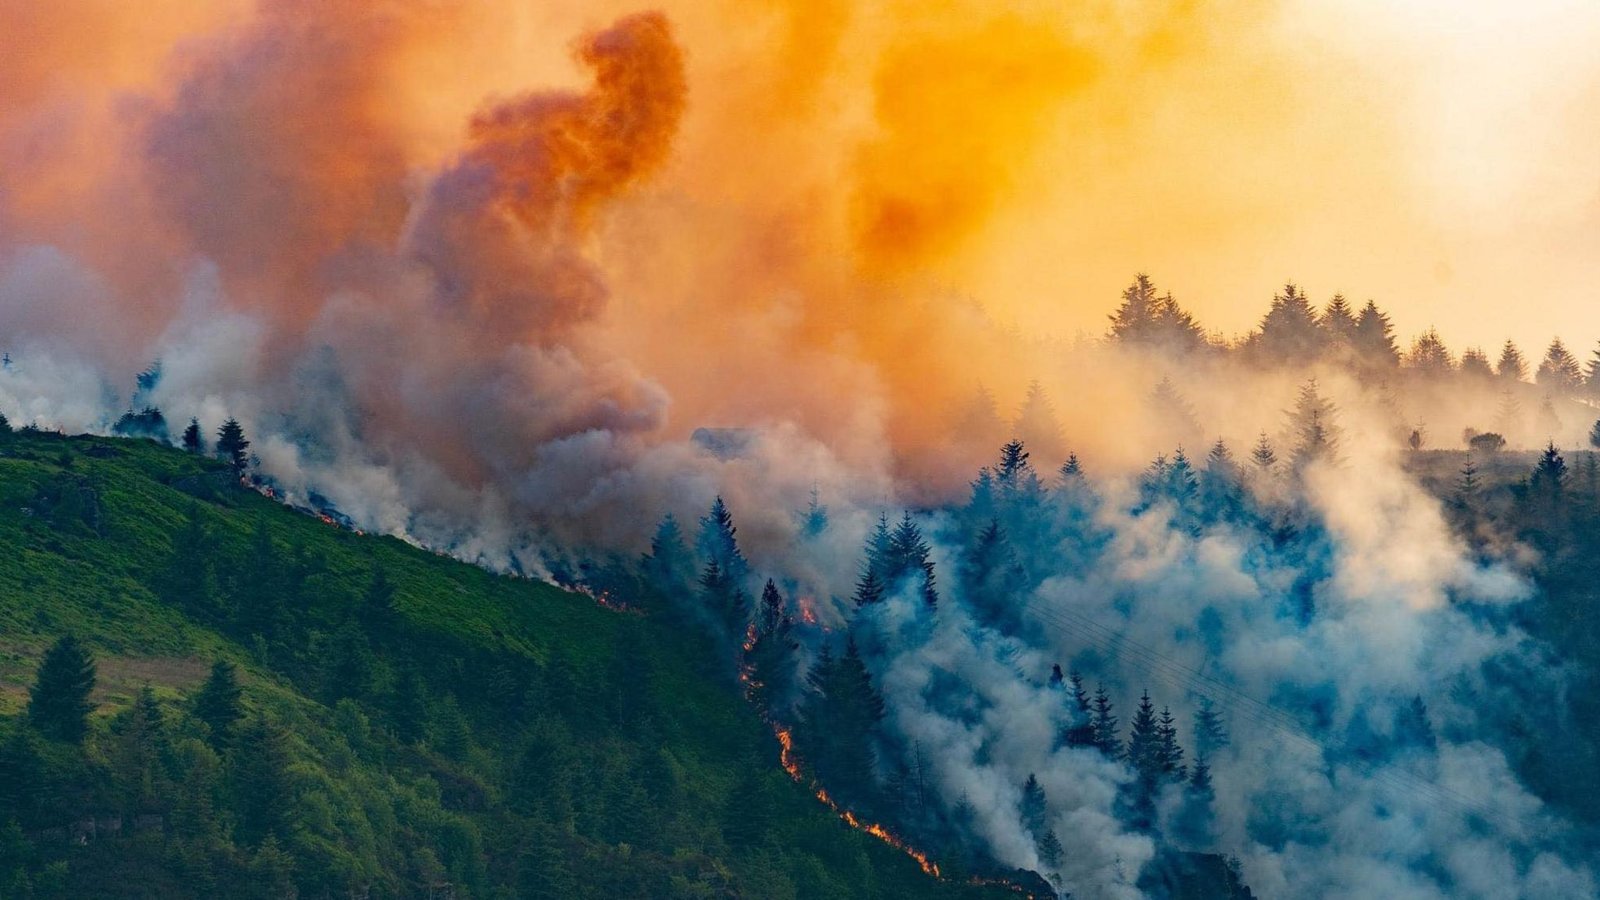 The year of wildfire smoke